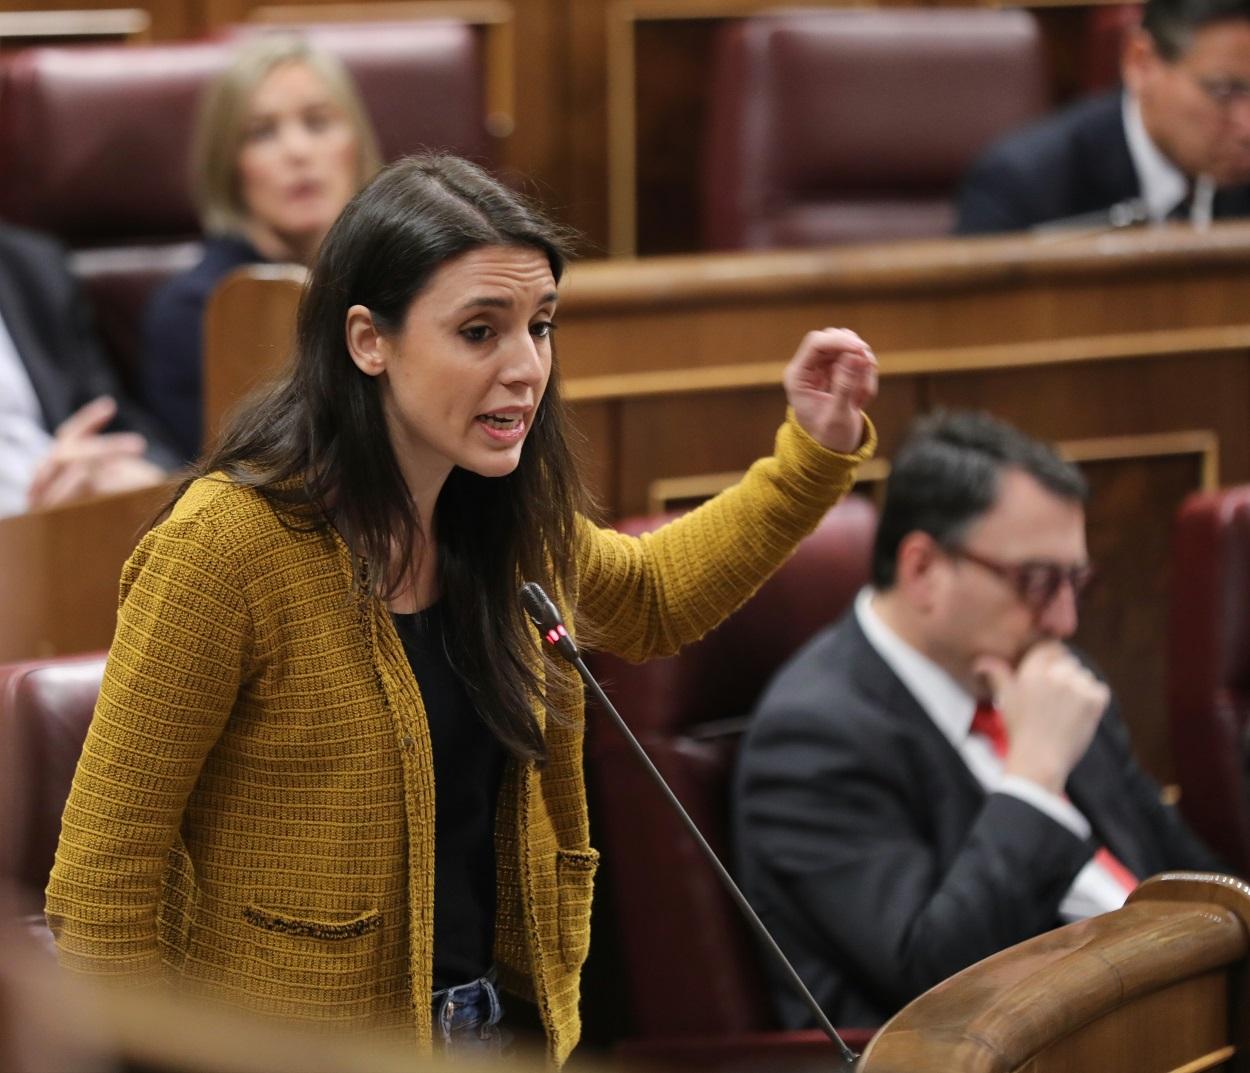 La portavoz parlamentaria de Podemos, Irene Montero